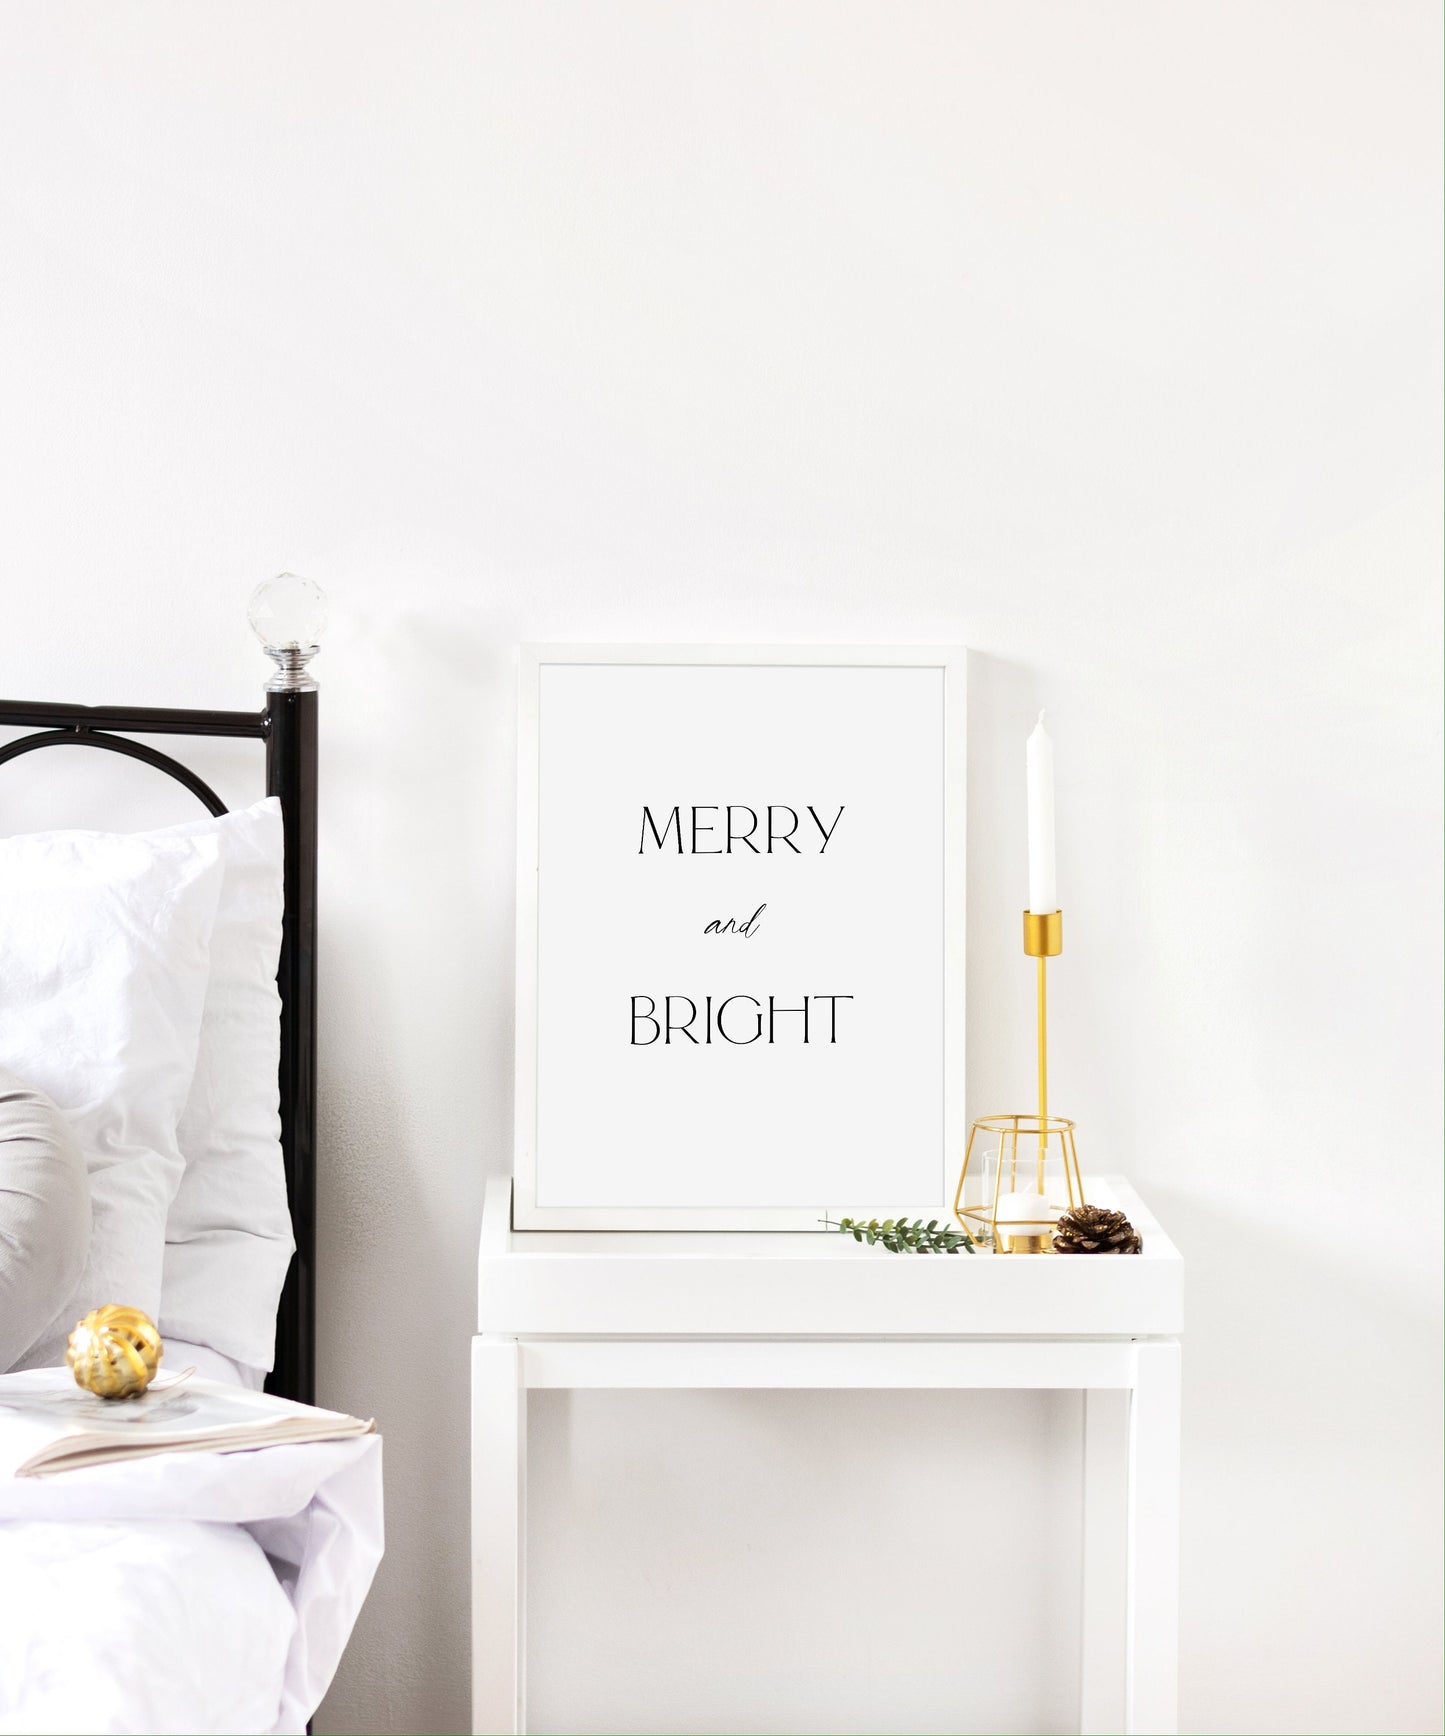 Merry and bright print, Christmas decor, Christmas wall art, Christmas quote, Christmas print,Fireplace mantel decor,Winter print,Minimalist